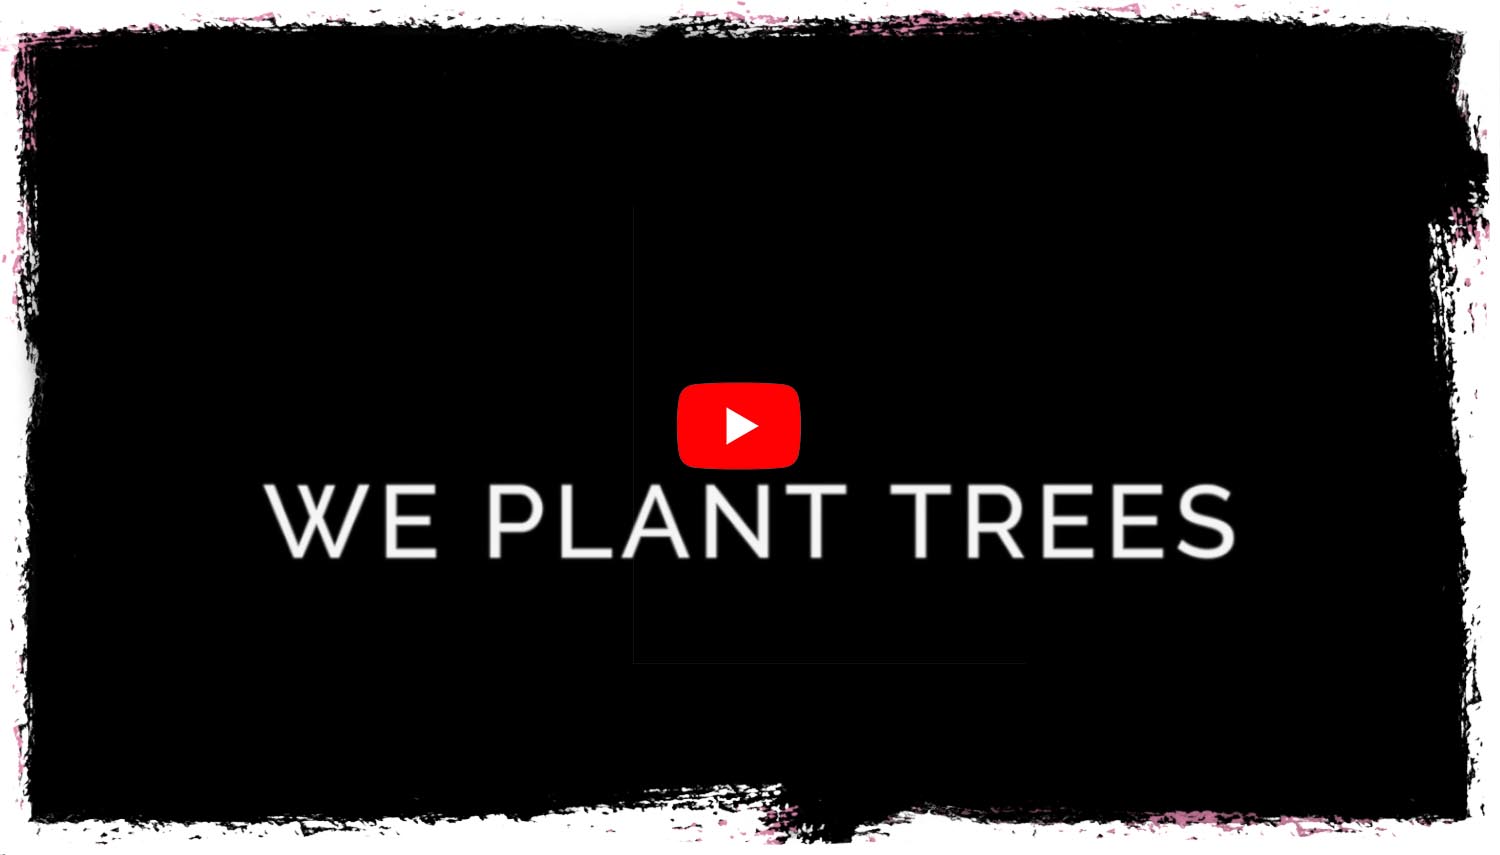  onetreeplanted.org.